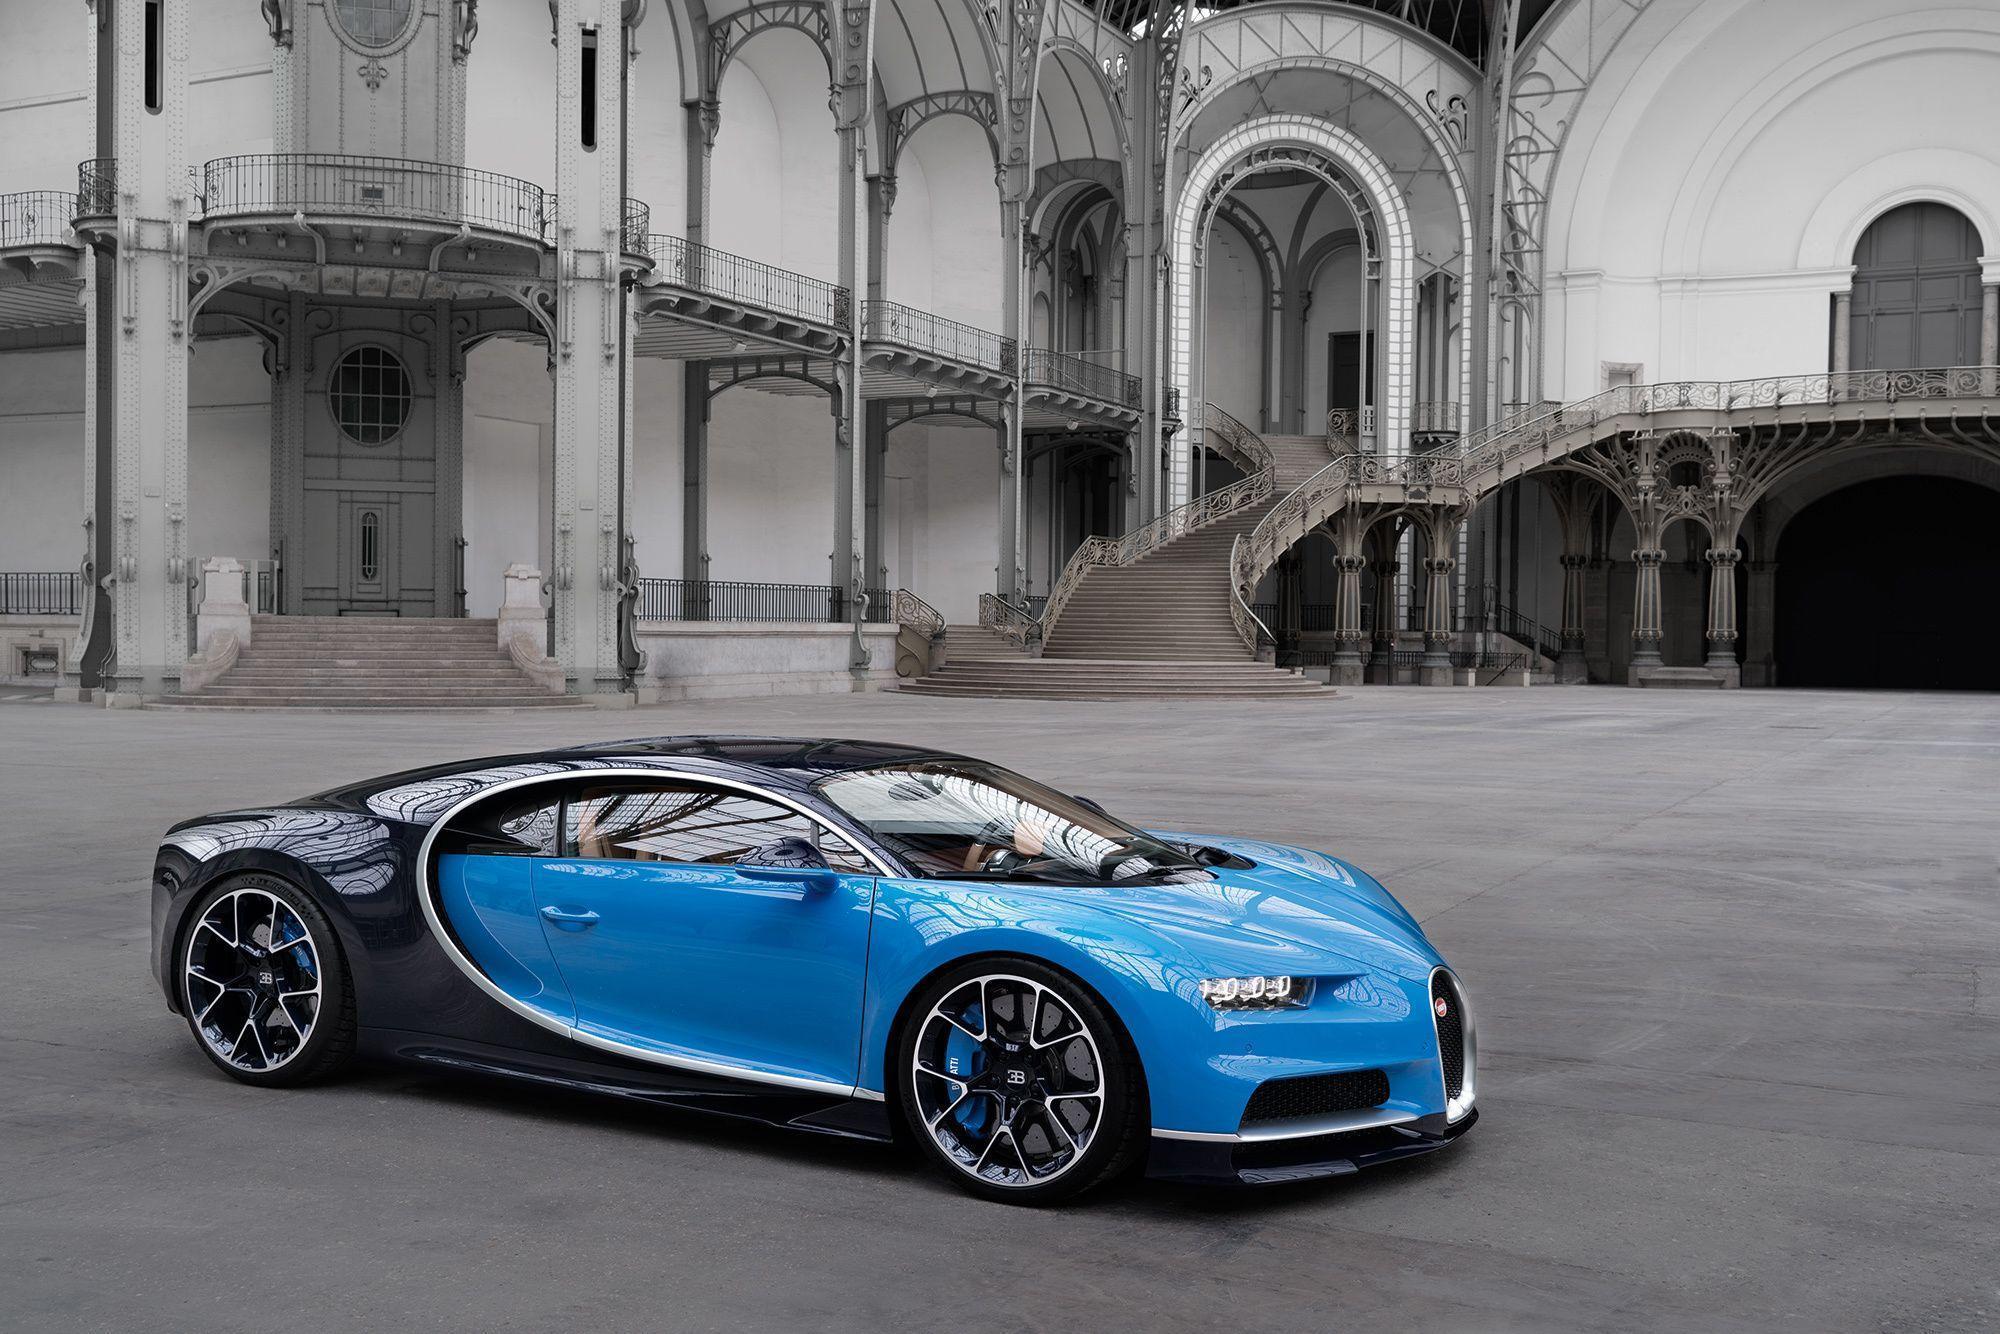 Bugatti Chiron HD Wallpapers for desktop download